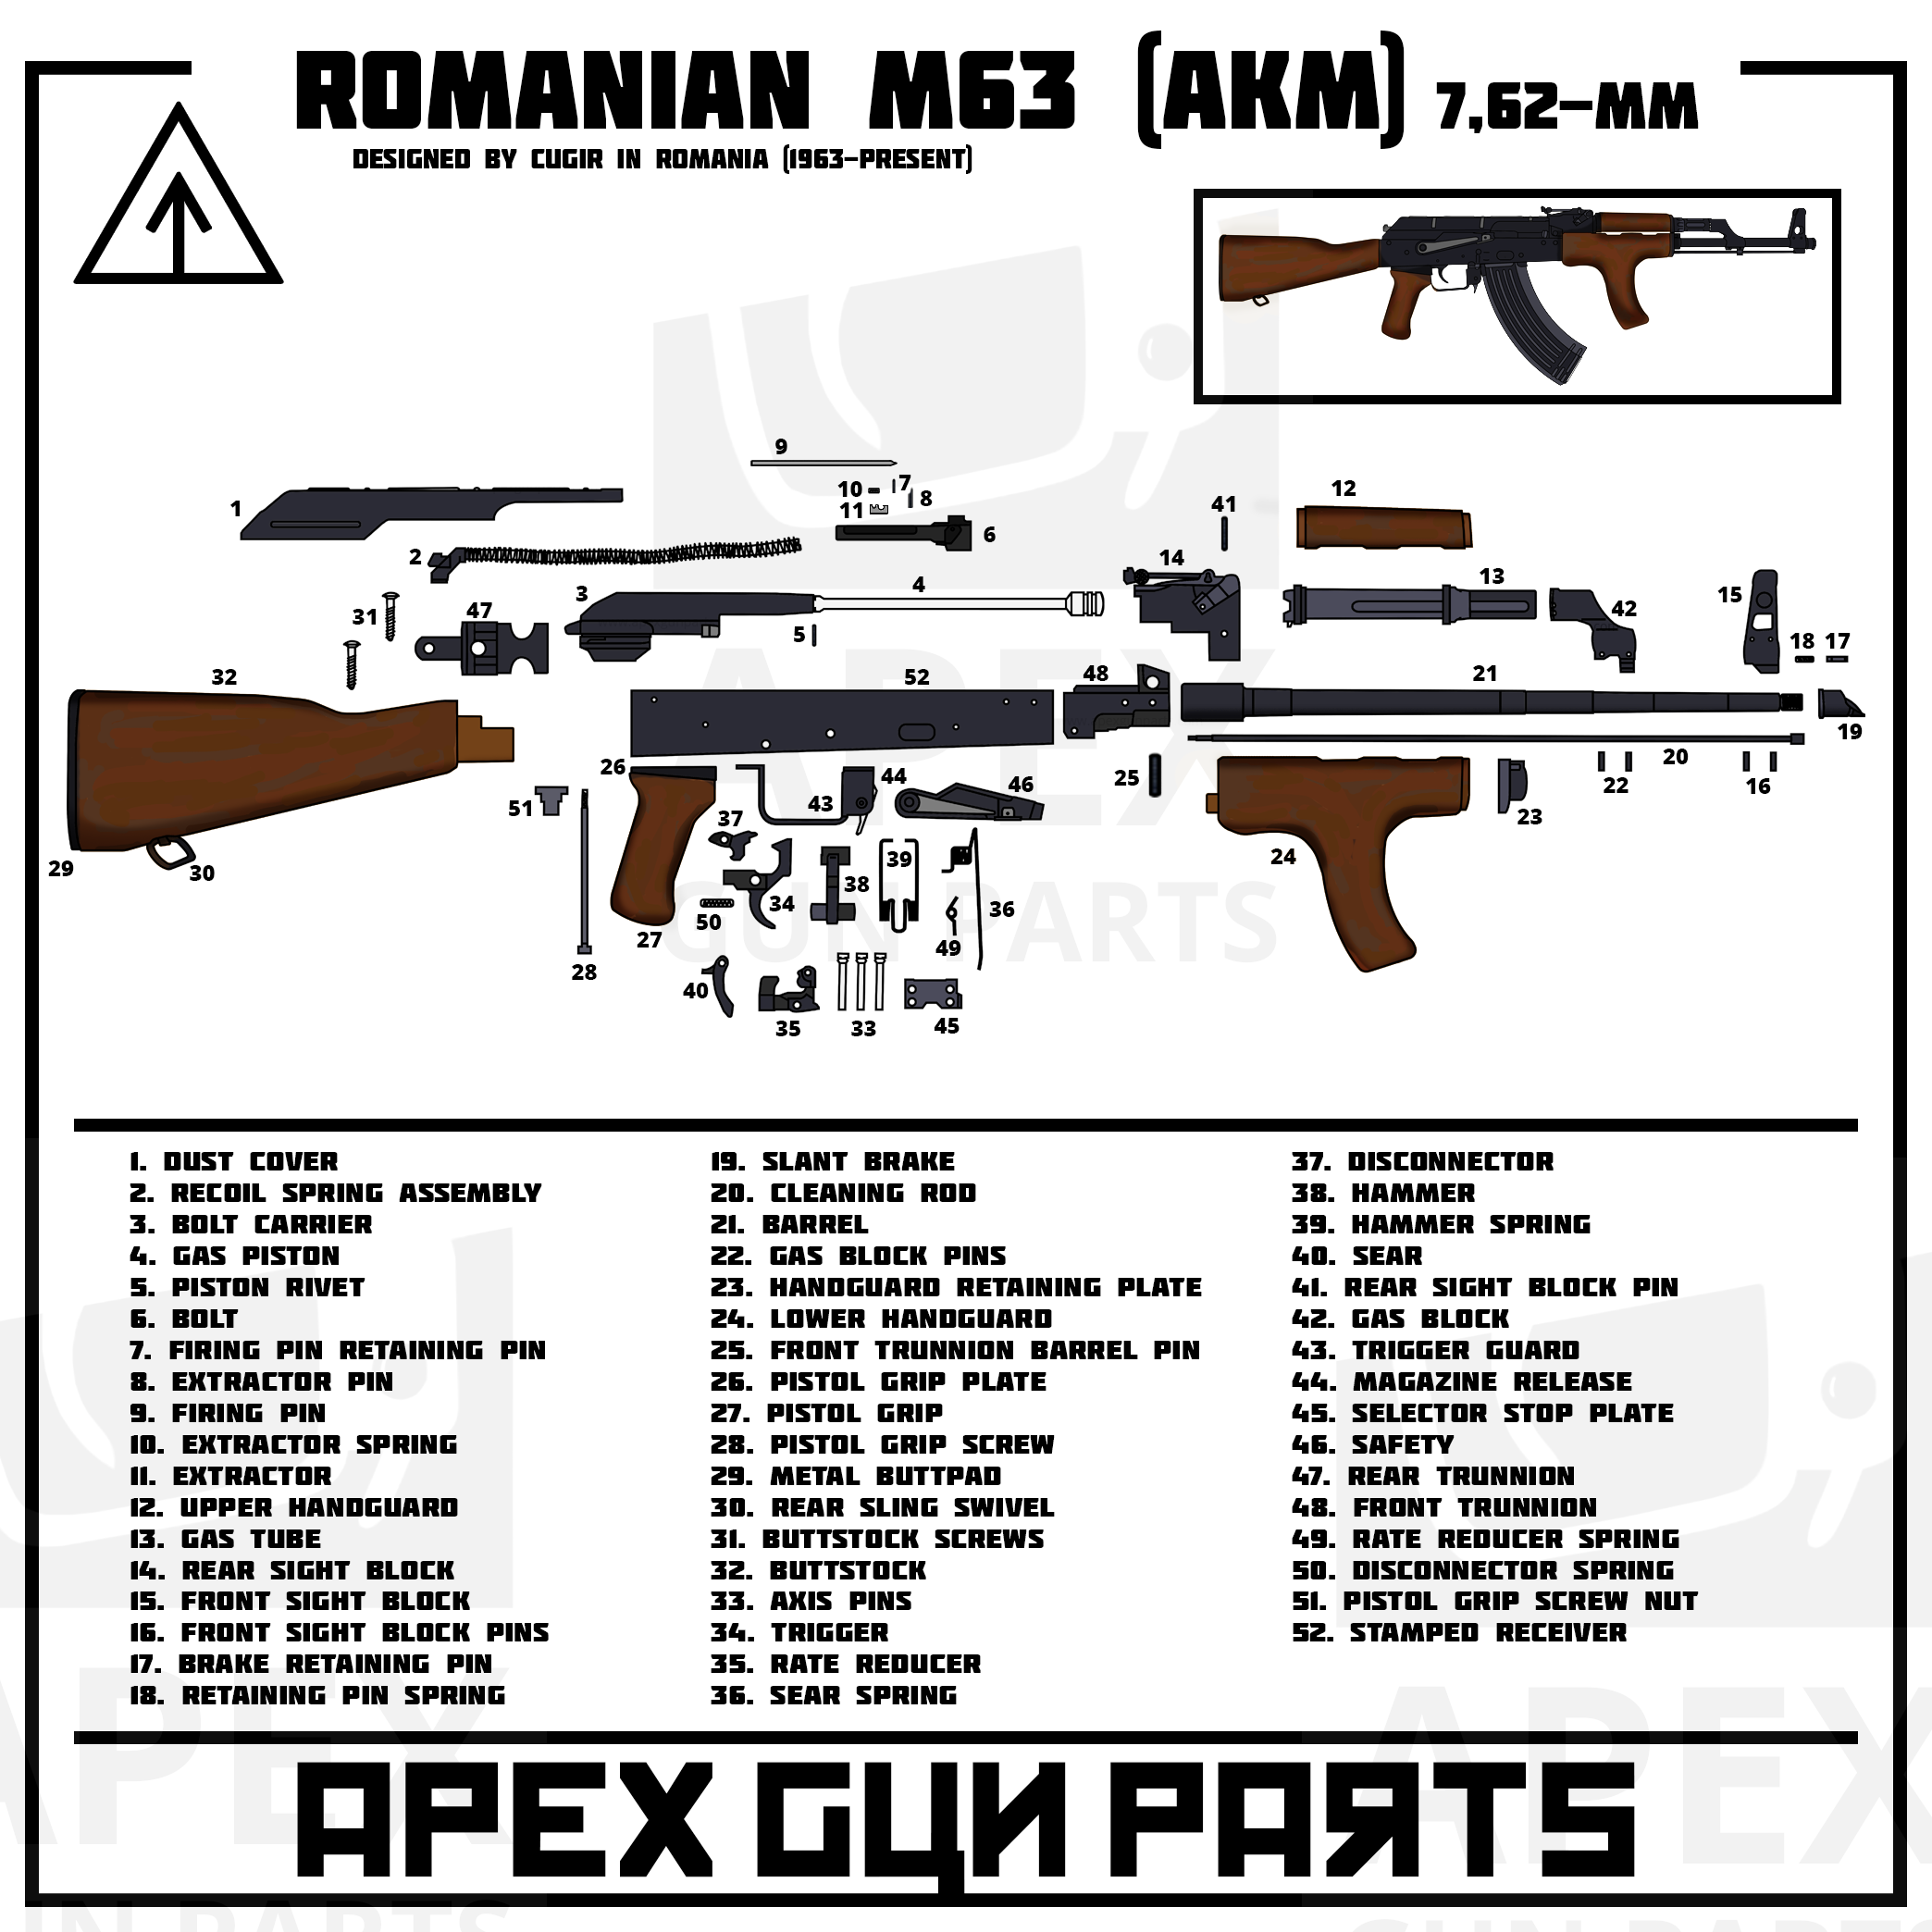 M63 (AKM) Expanded View